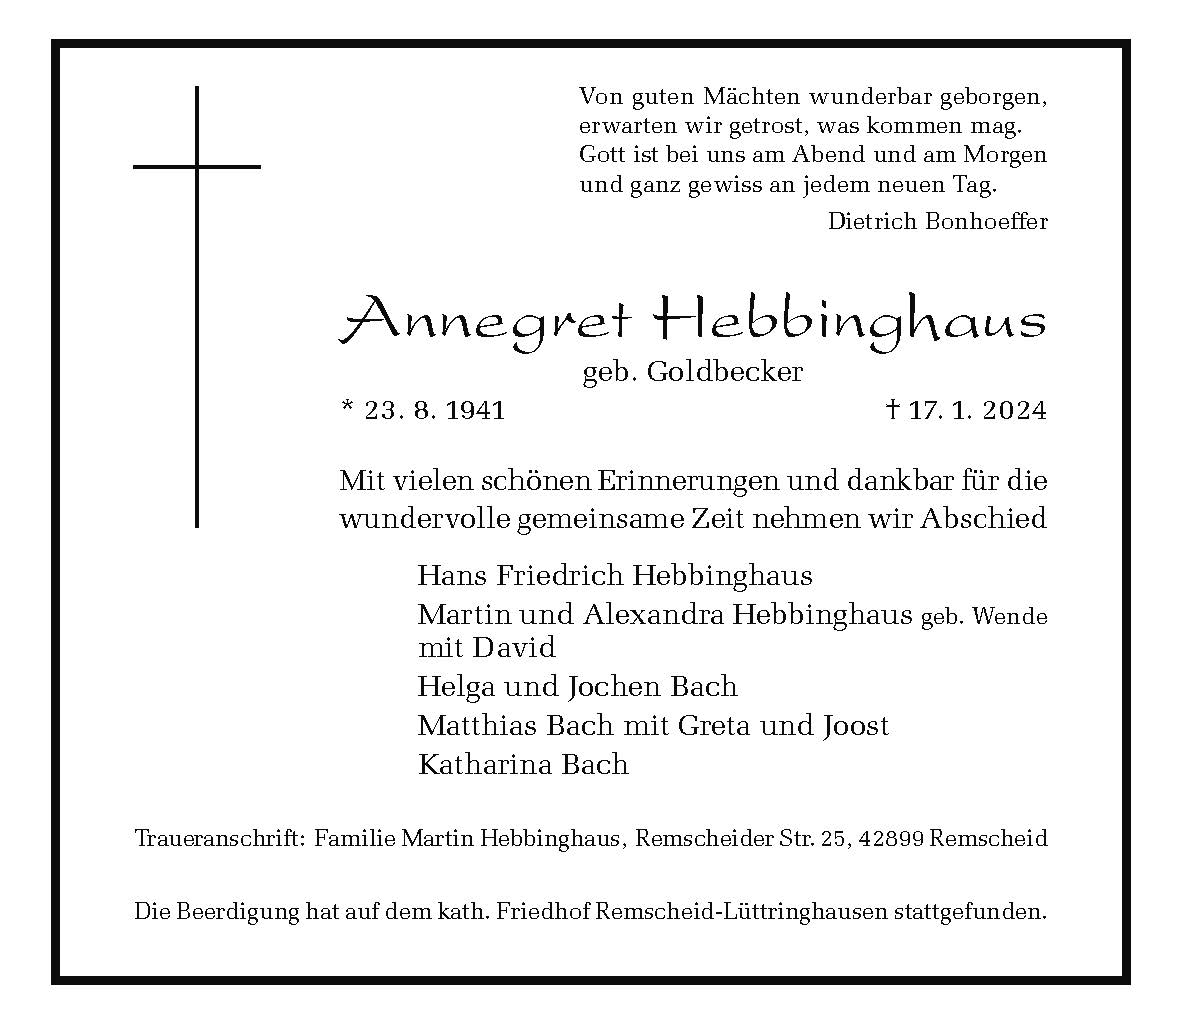 Annegret Hebbinghaus